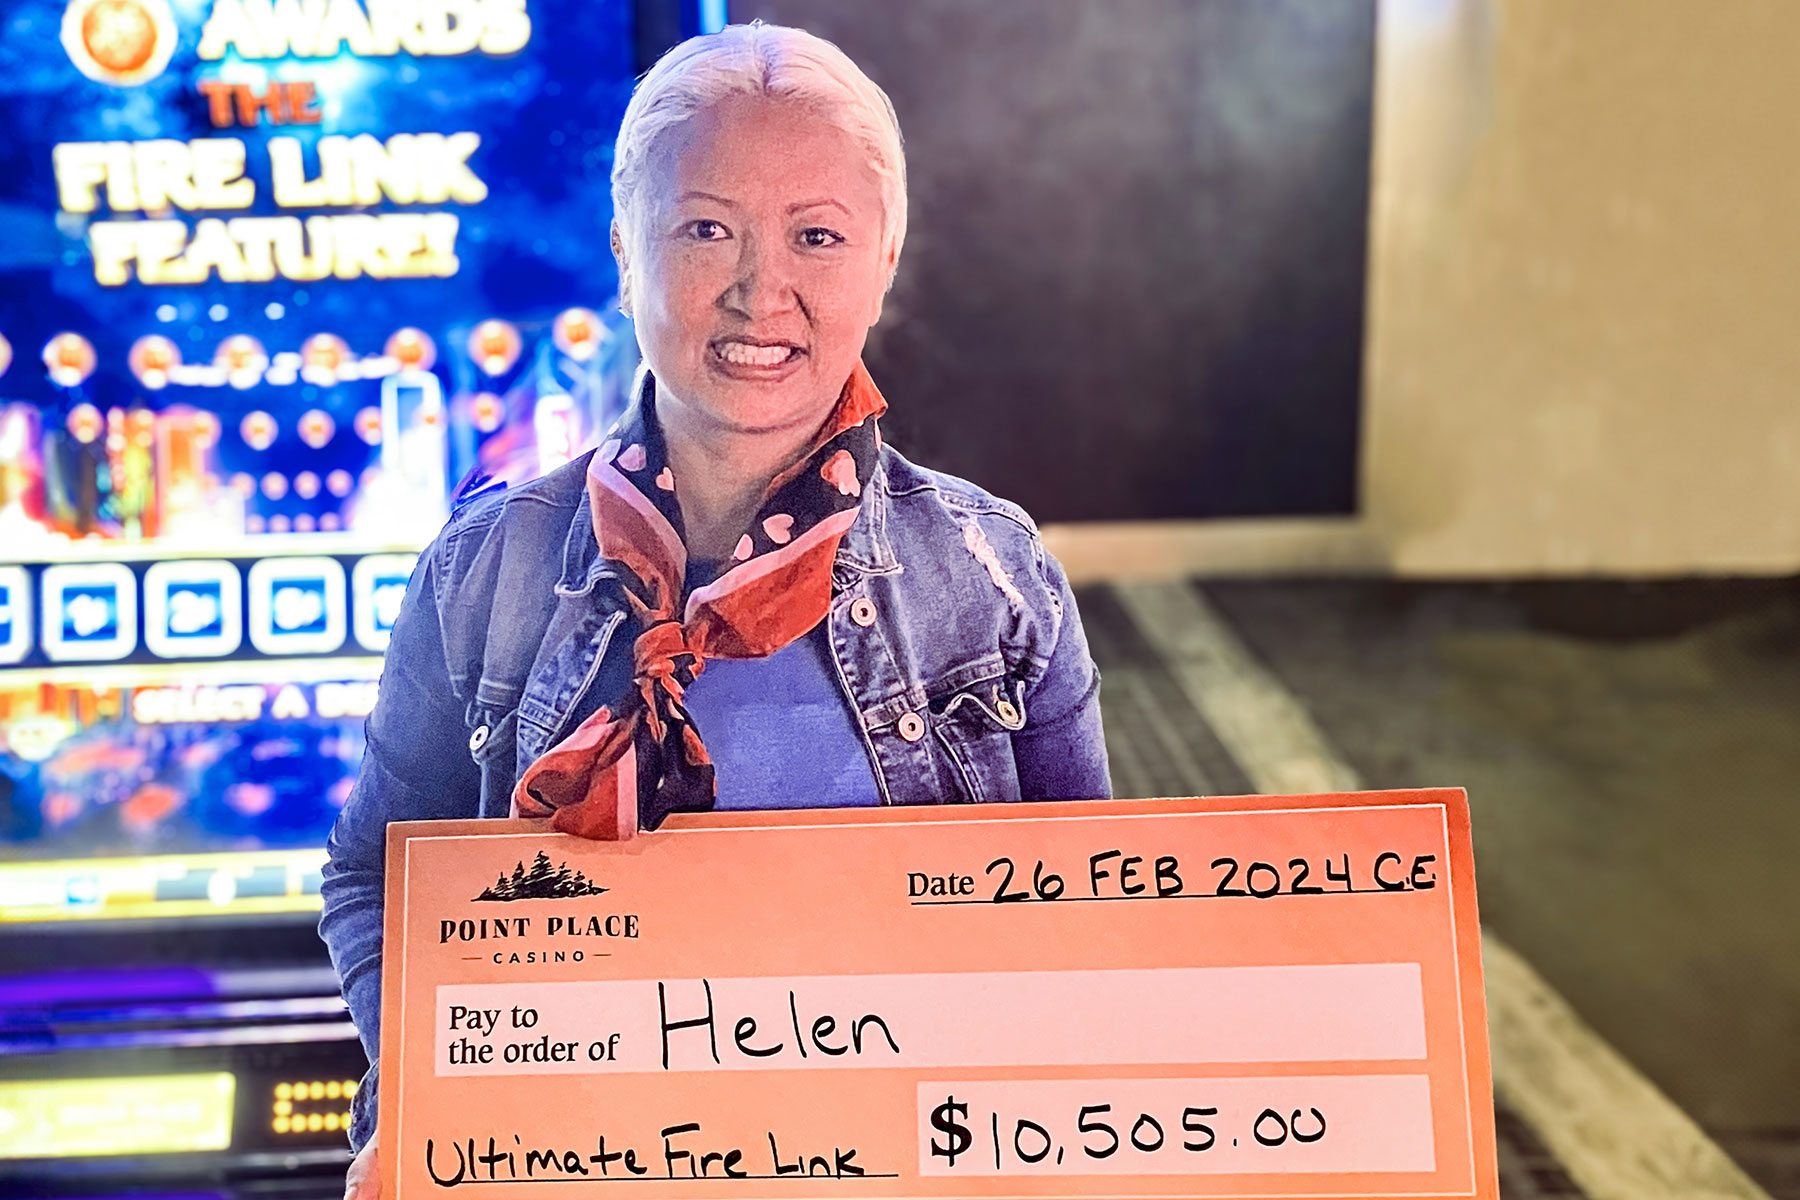 Helen won $10,505